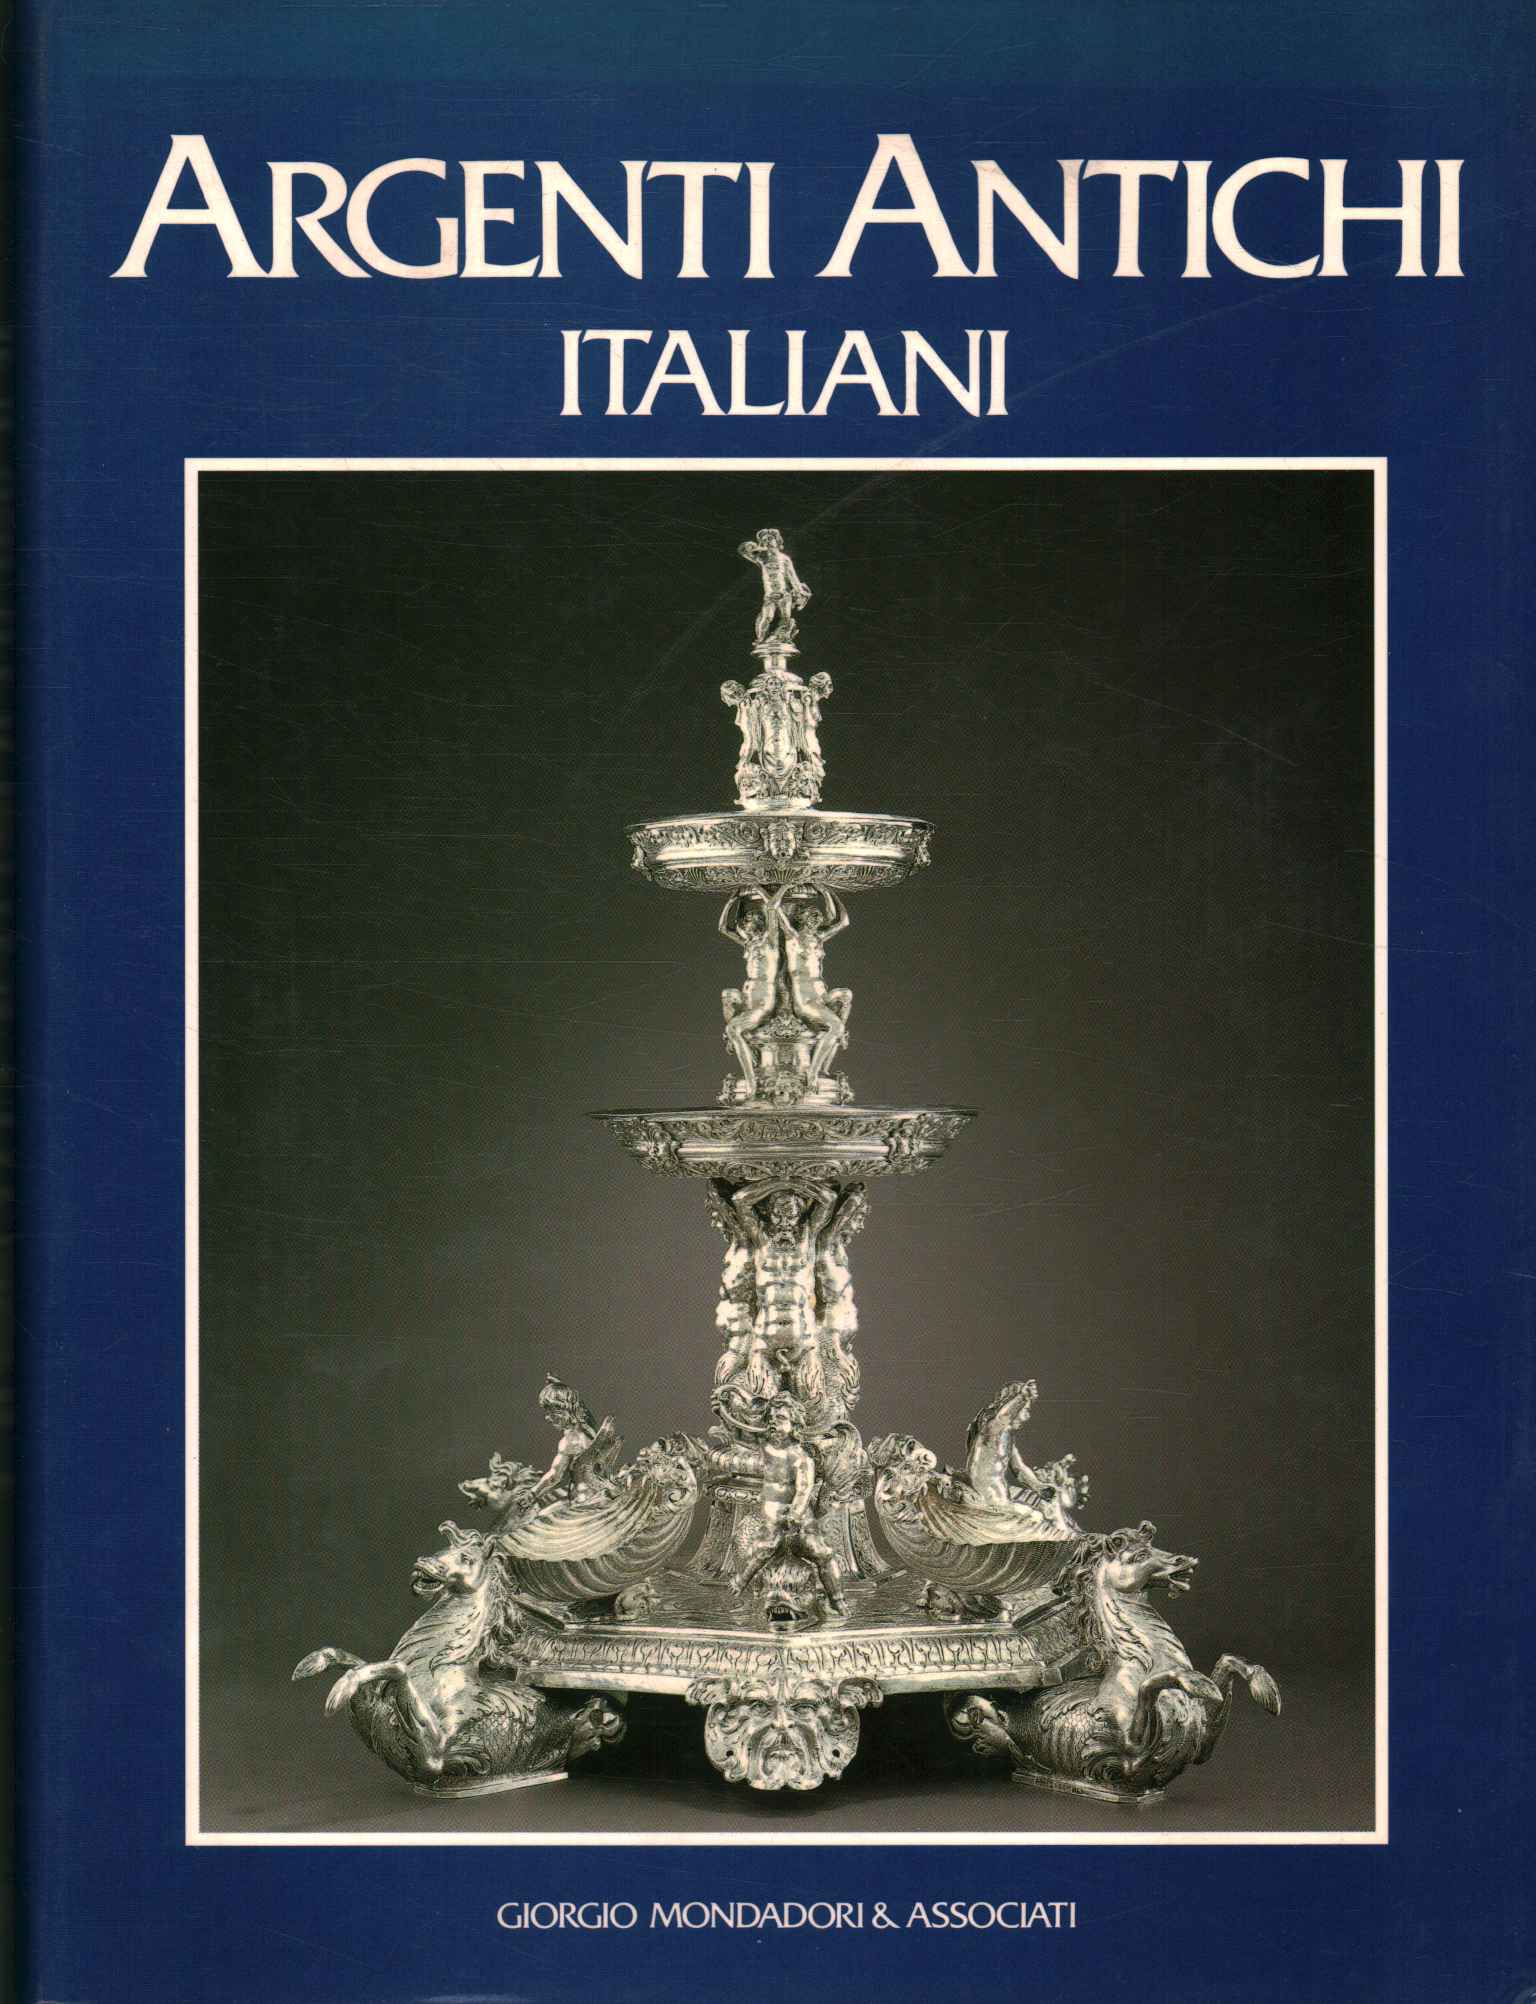 Ancient Italian silver